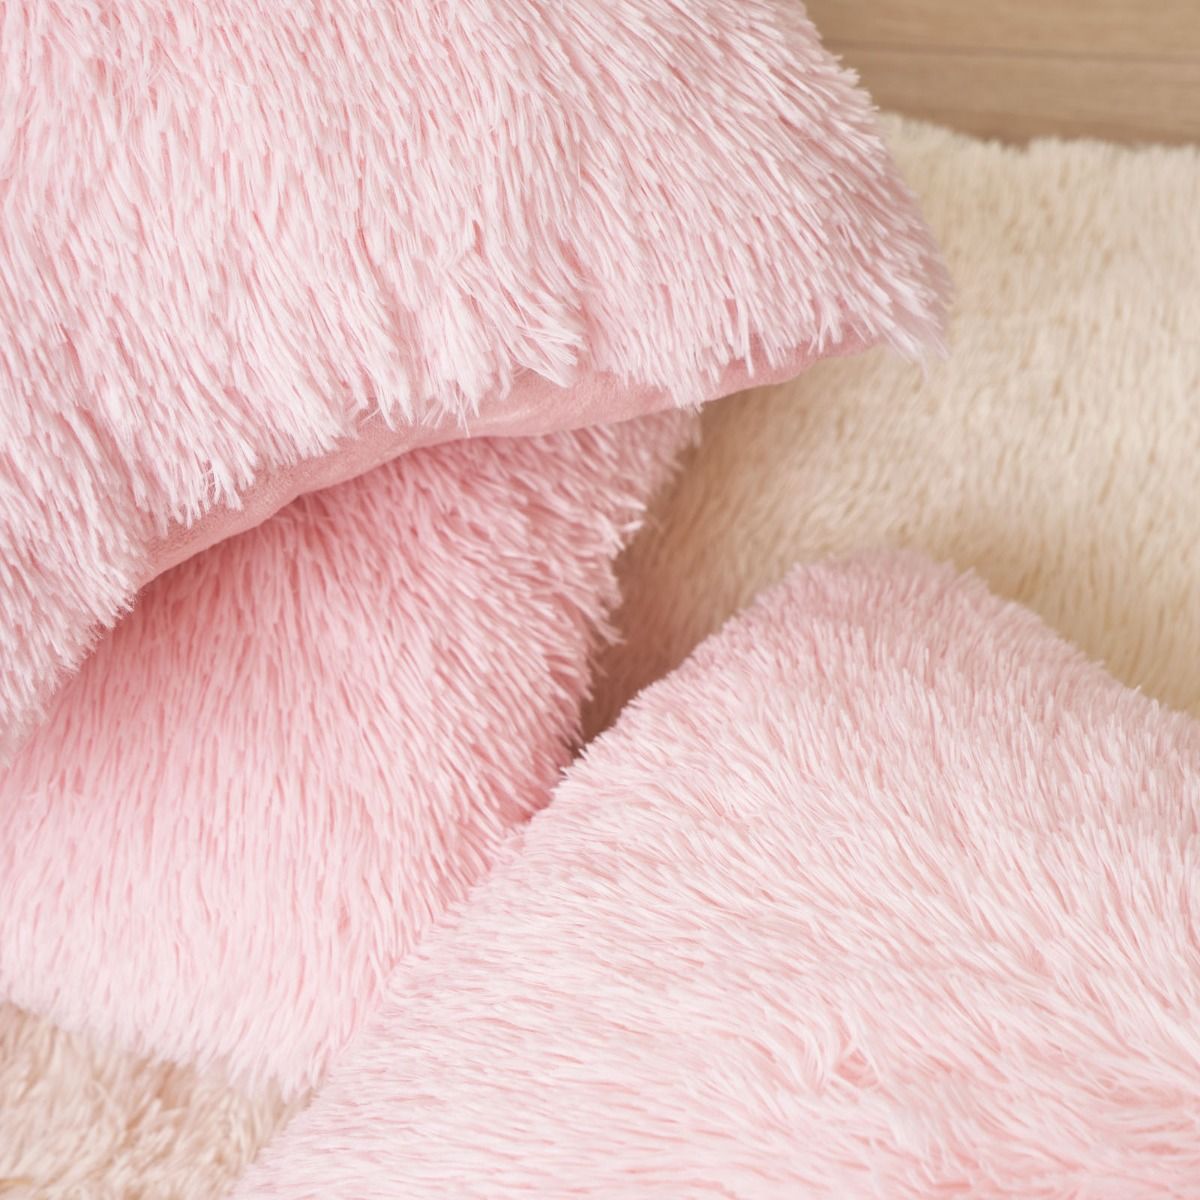 Sienna 4 Pack Fluffy Cushion Covers - Blush